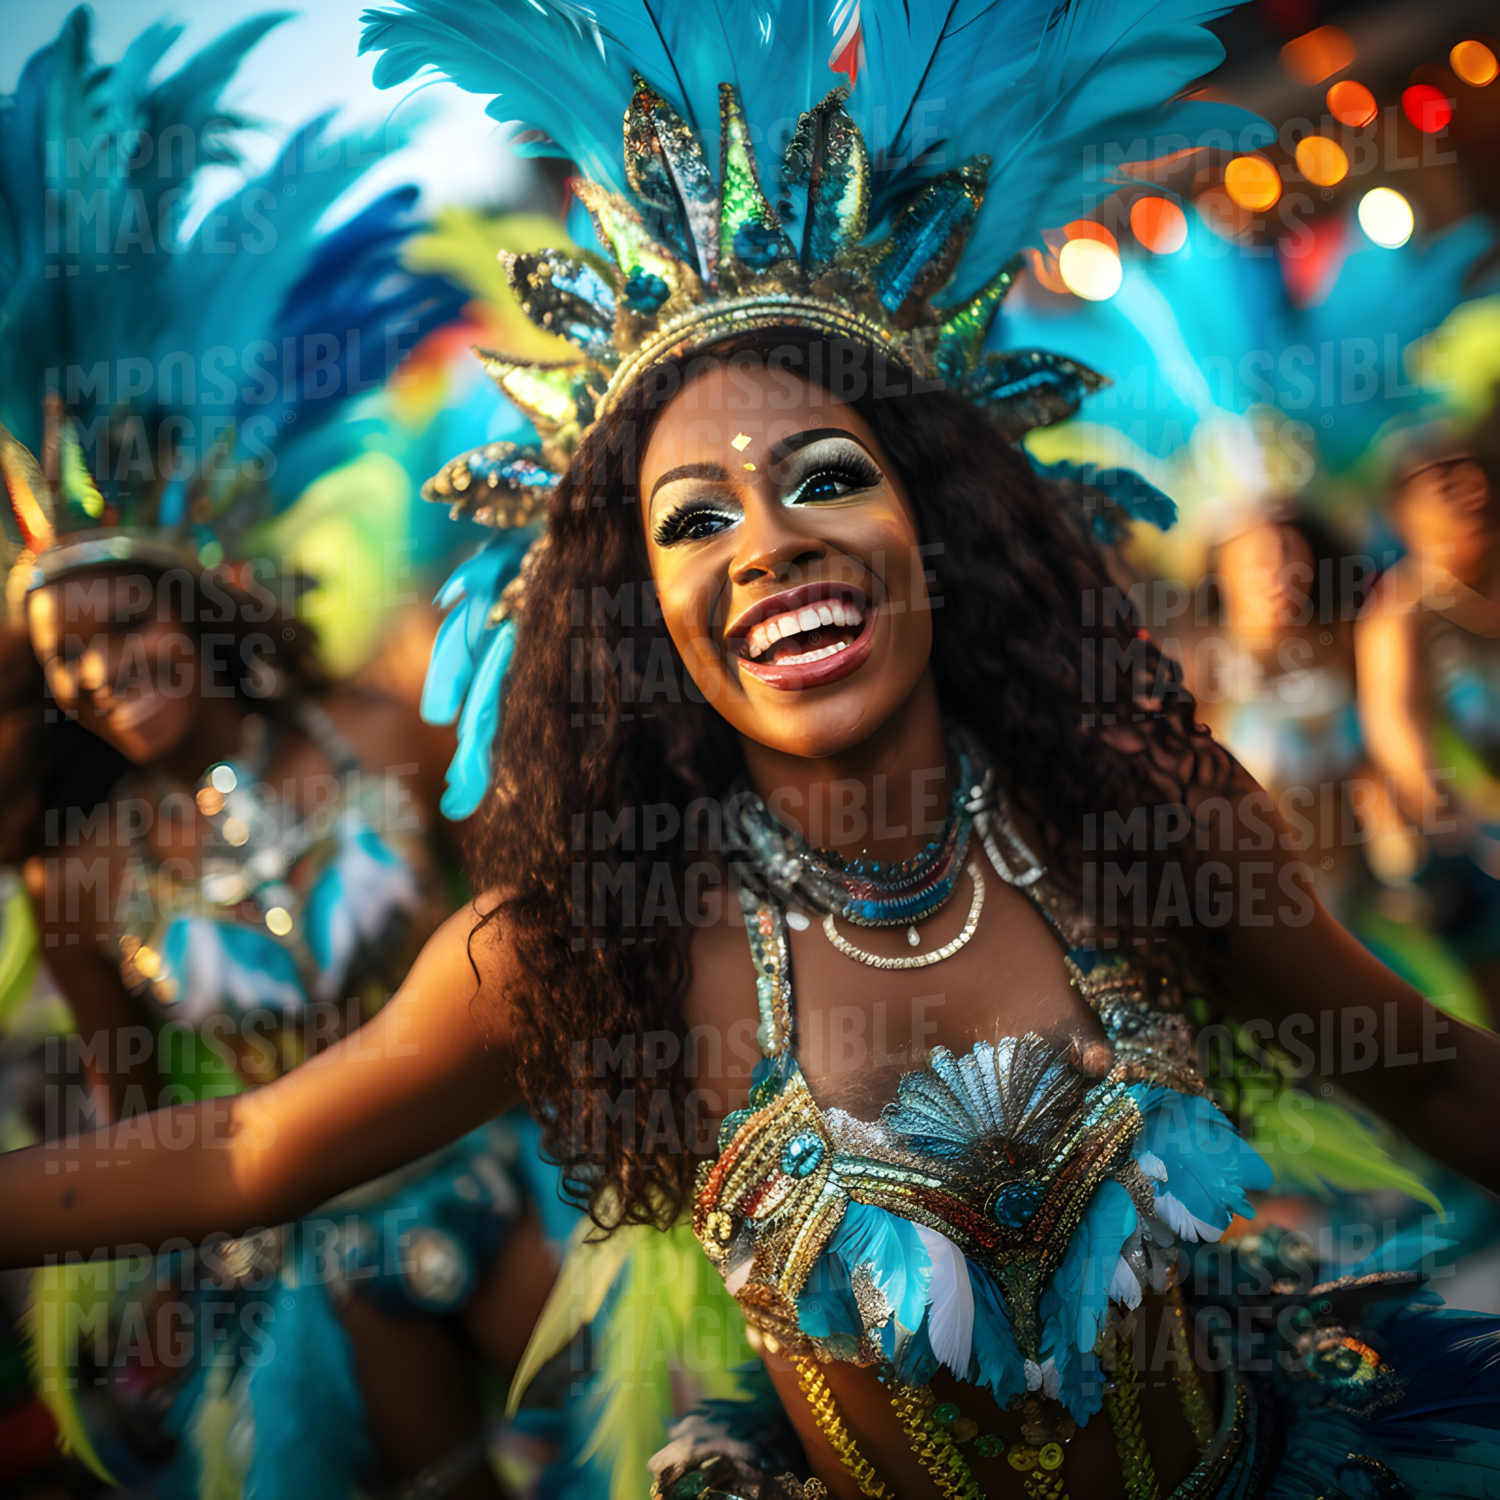 Scenes from a Brazilian carnival street party